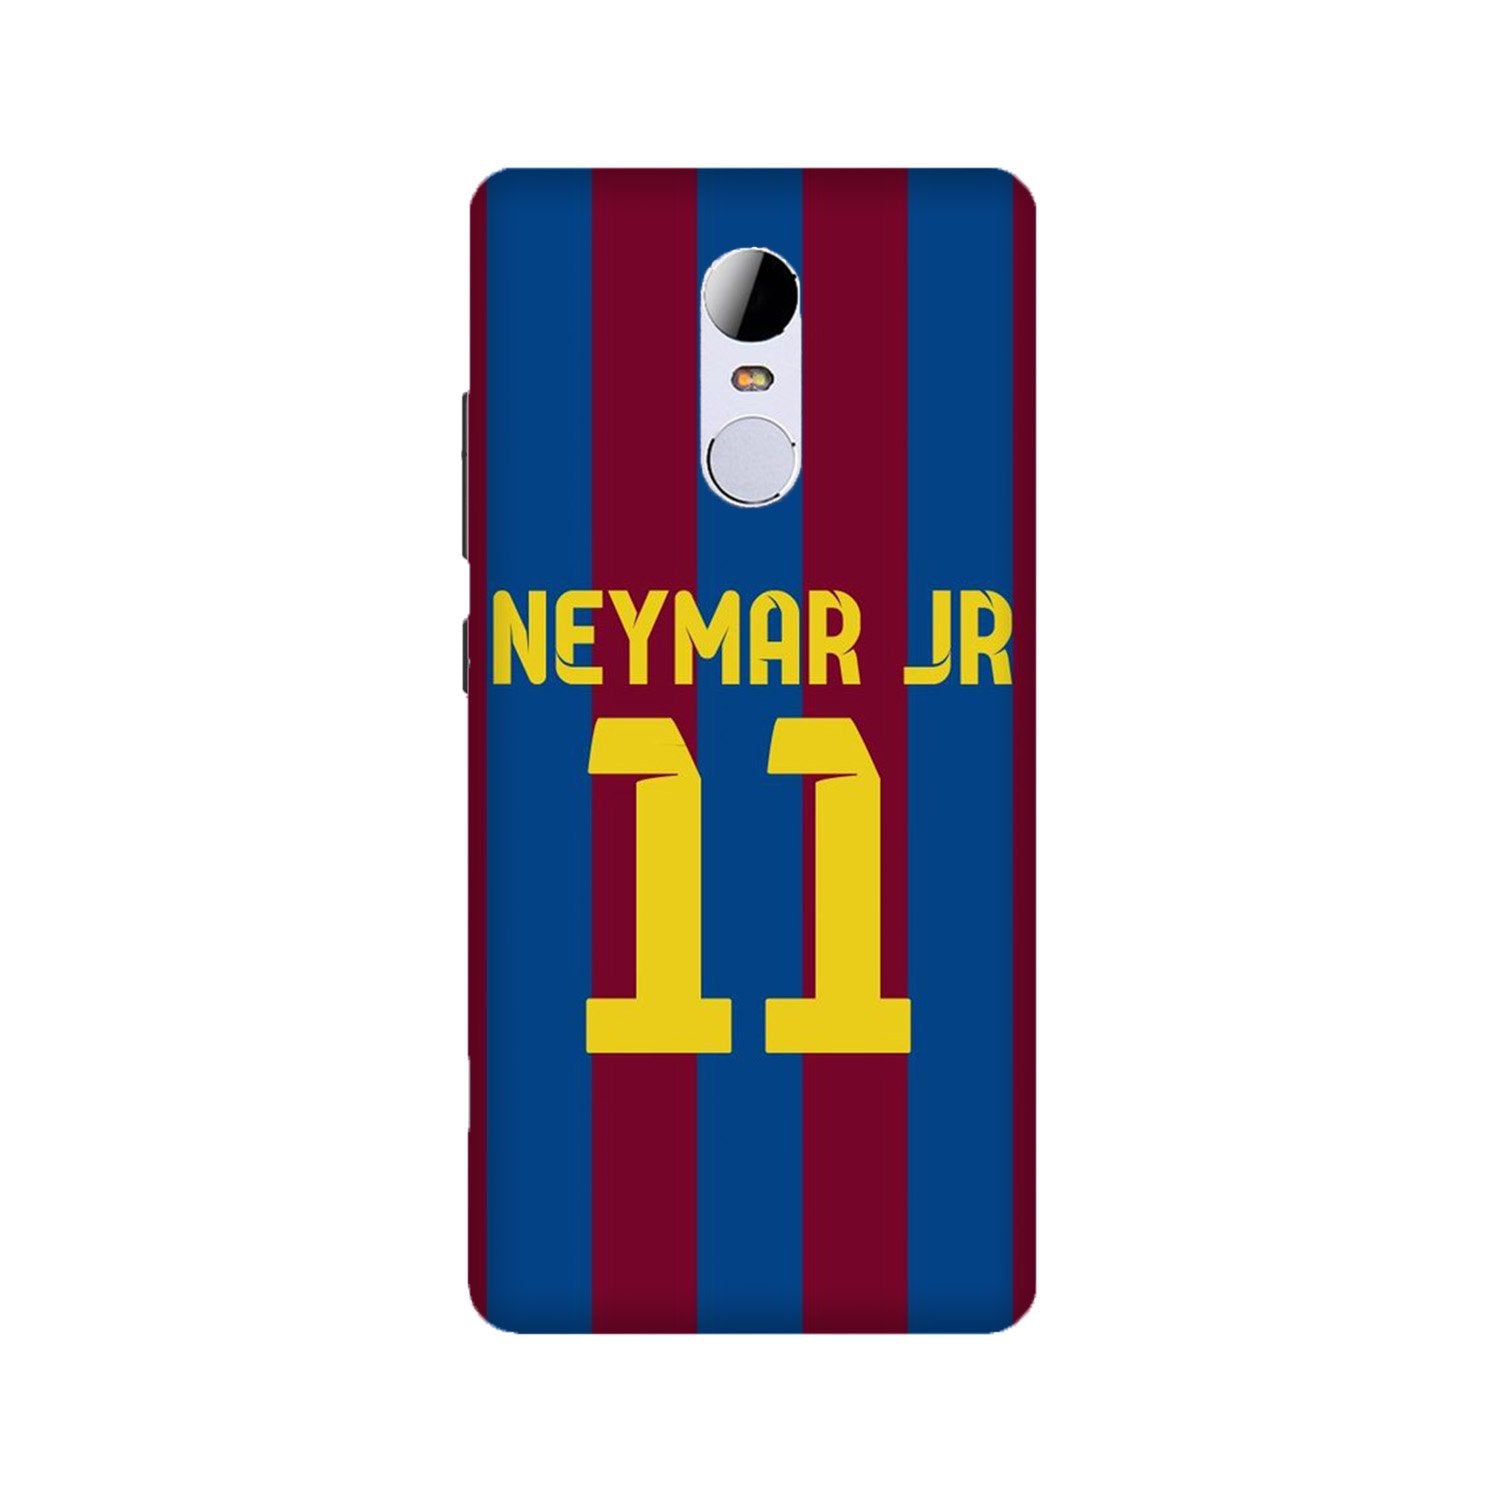 Neymar Jr Case for Redmi Note 4(Design - 162)